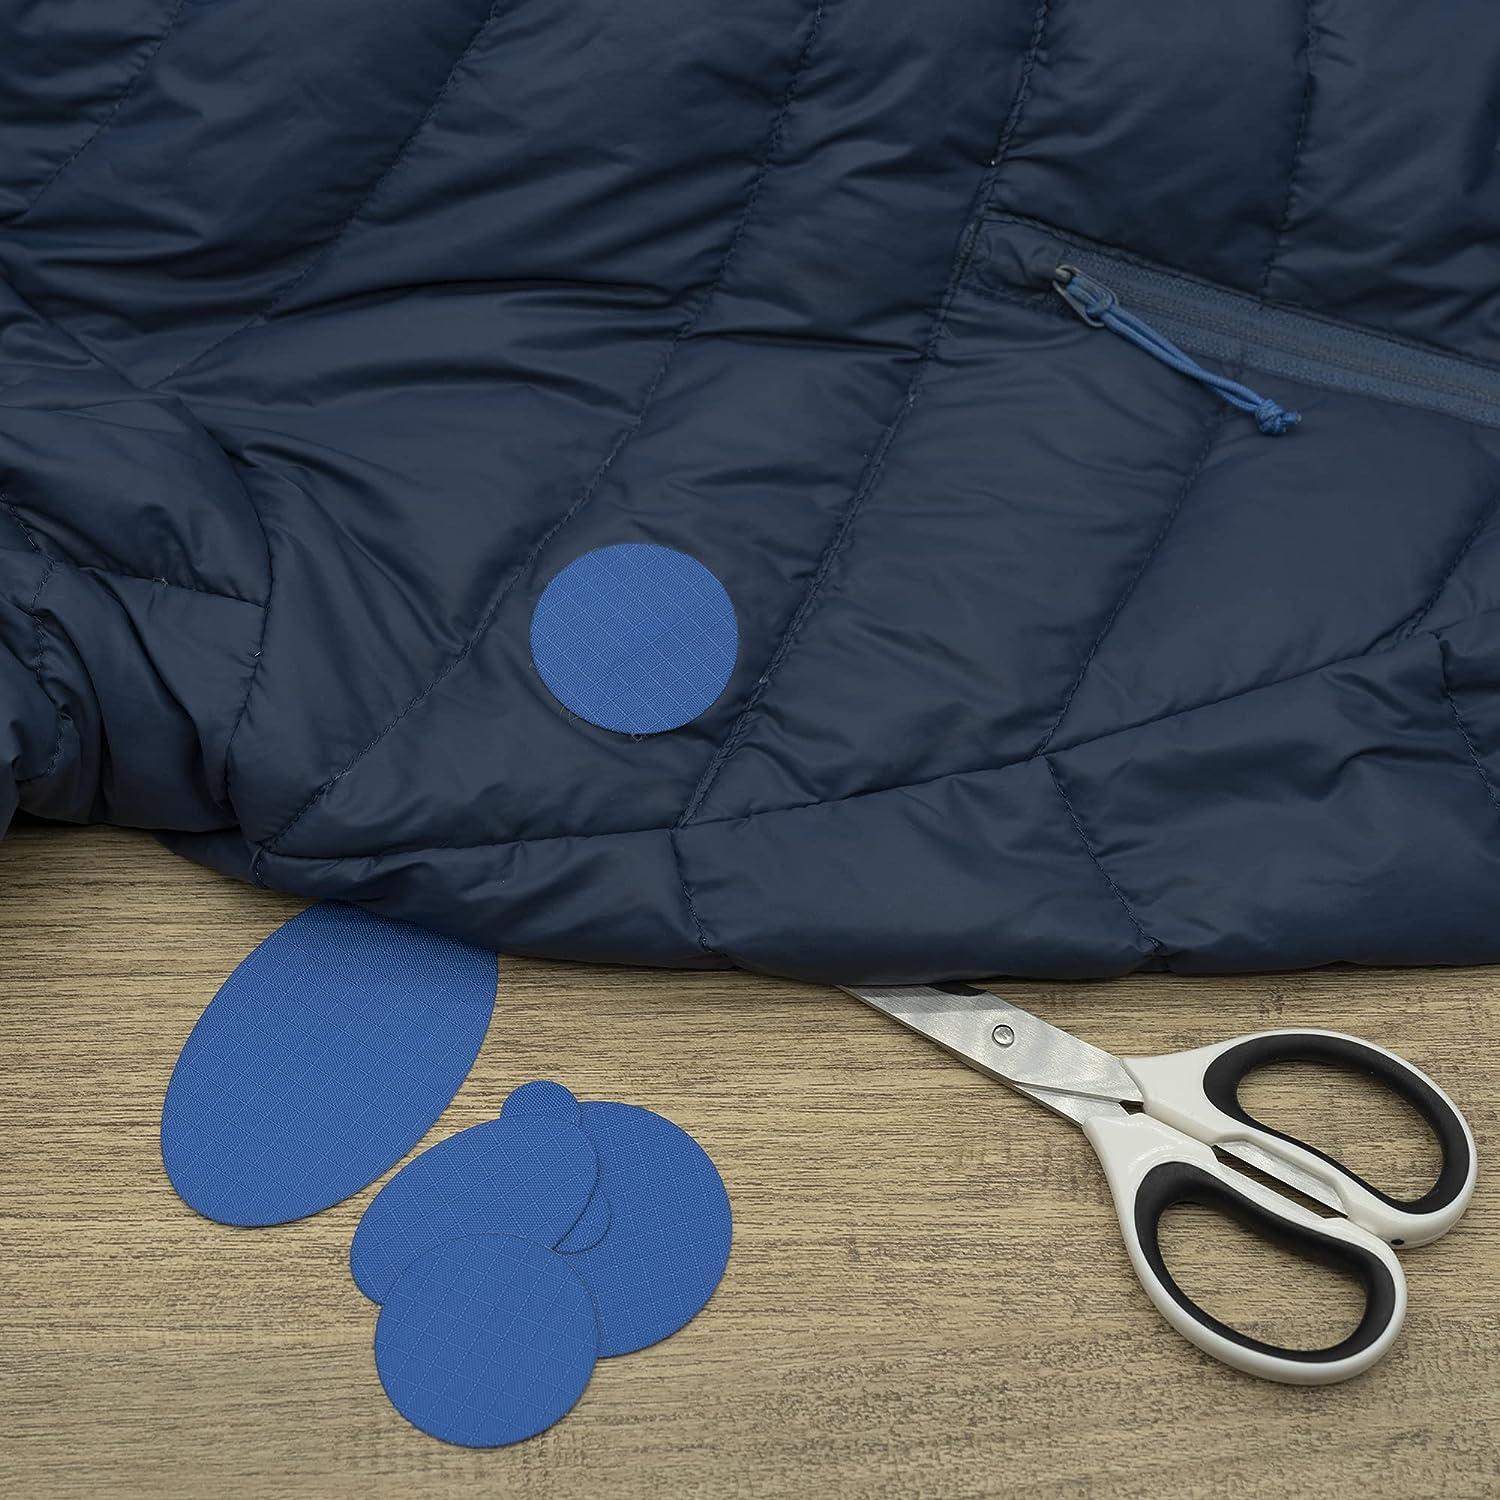 aZengear Down Jacket Repair Patches  Self-Adhesive, Waterproof,  Tear-Resistant (11 Pieces)